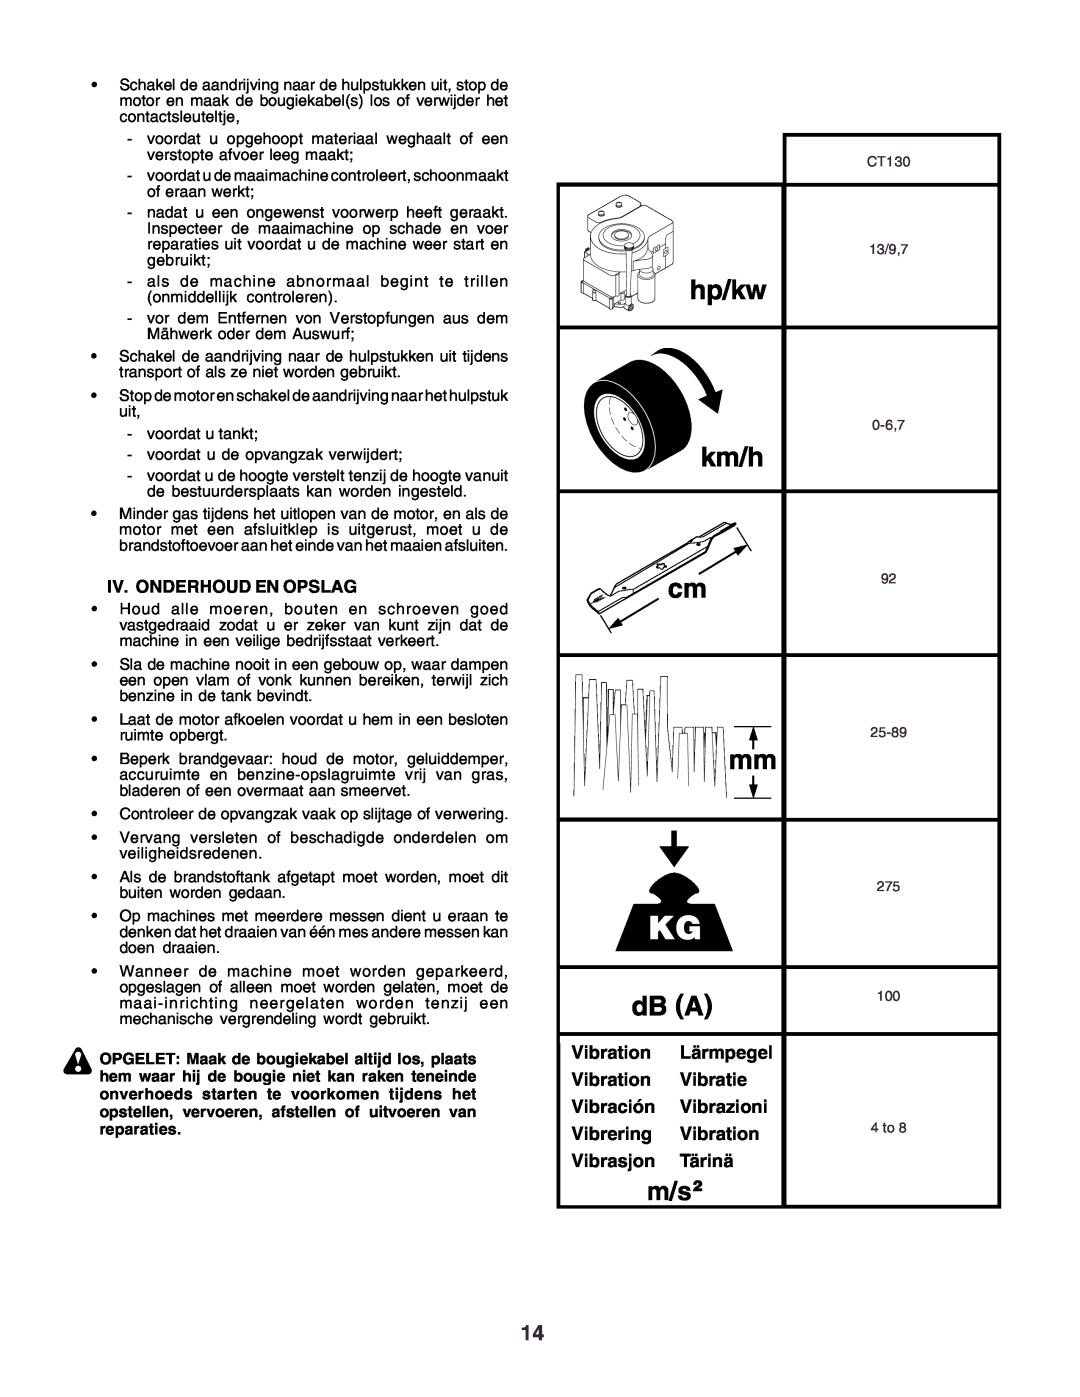 Husqvarna CT130 instruction manual Vibration, Lärmpegel, Vibratie, Vibración, Vibrazioni, Vibrering, Vibrasjon Tärinä 